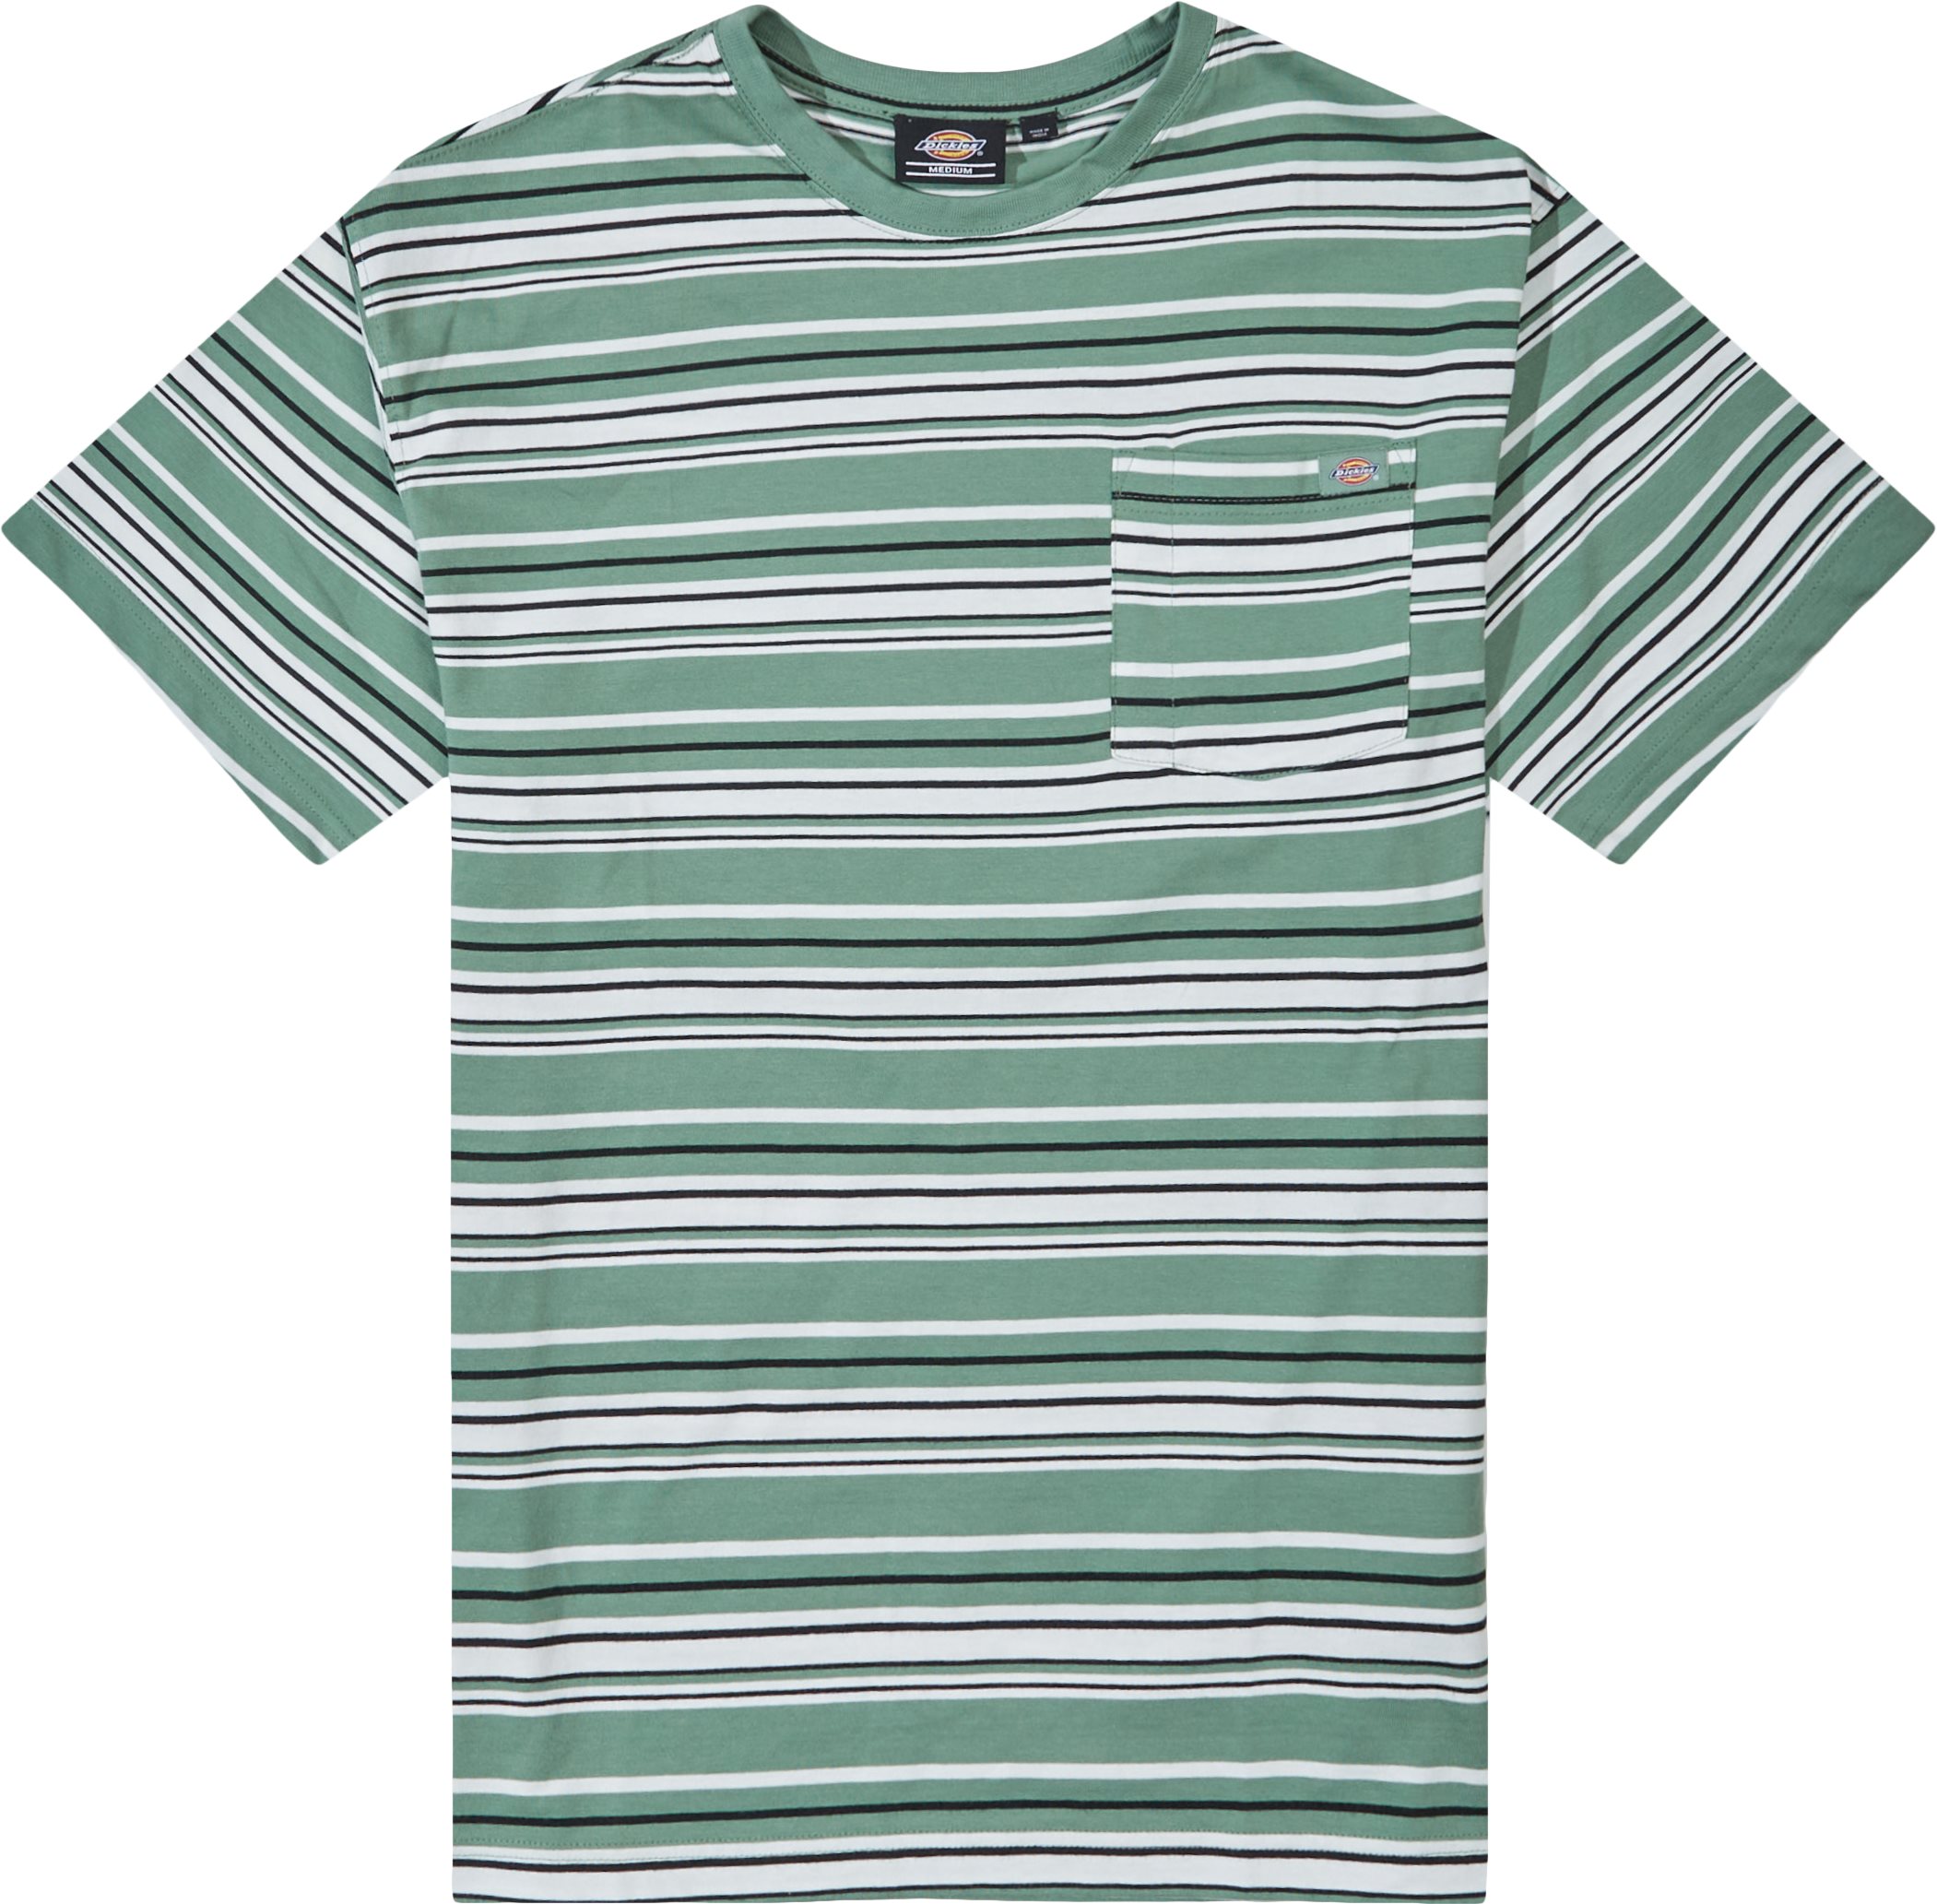 Westover Stripe - T-shirts - Regular fit - Green